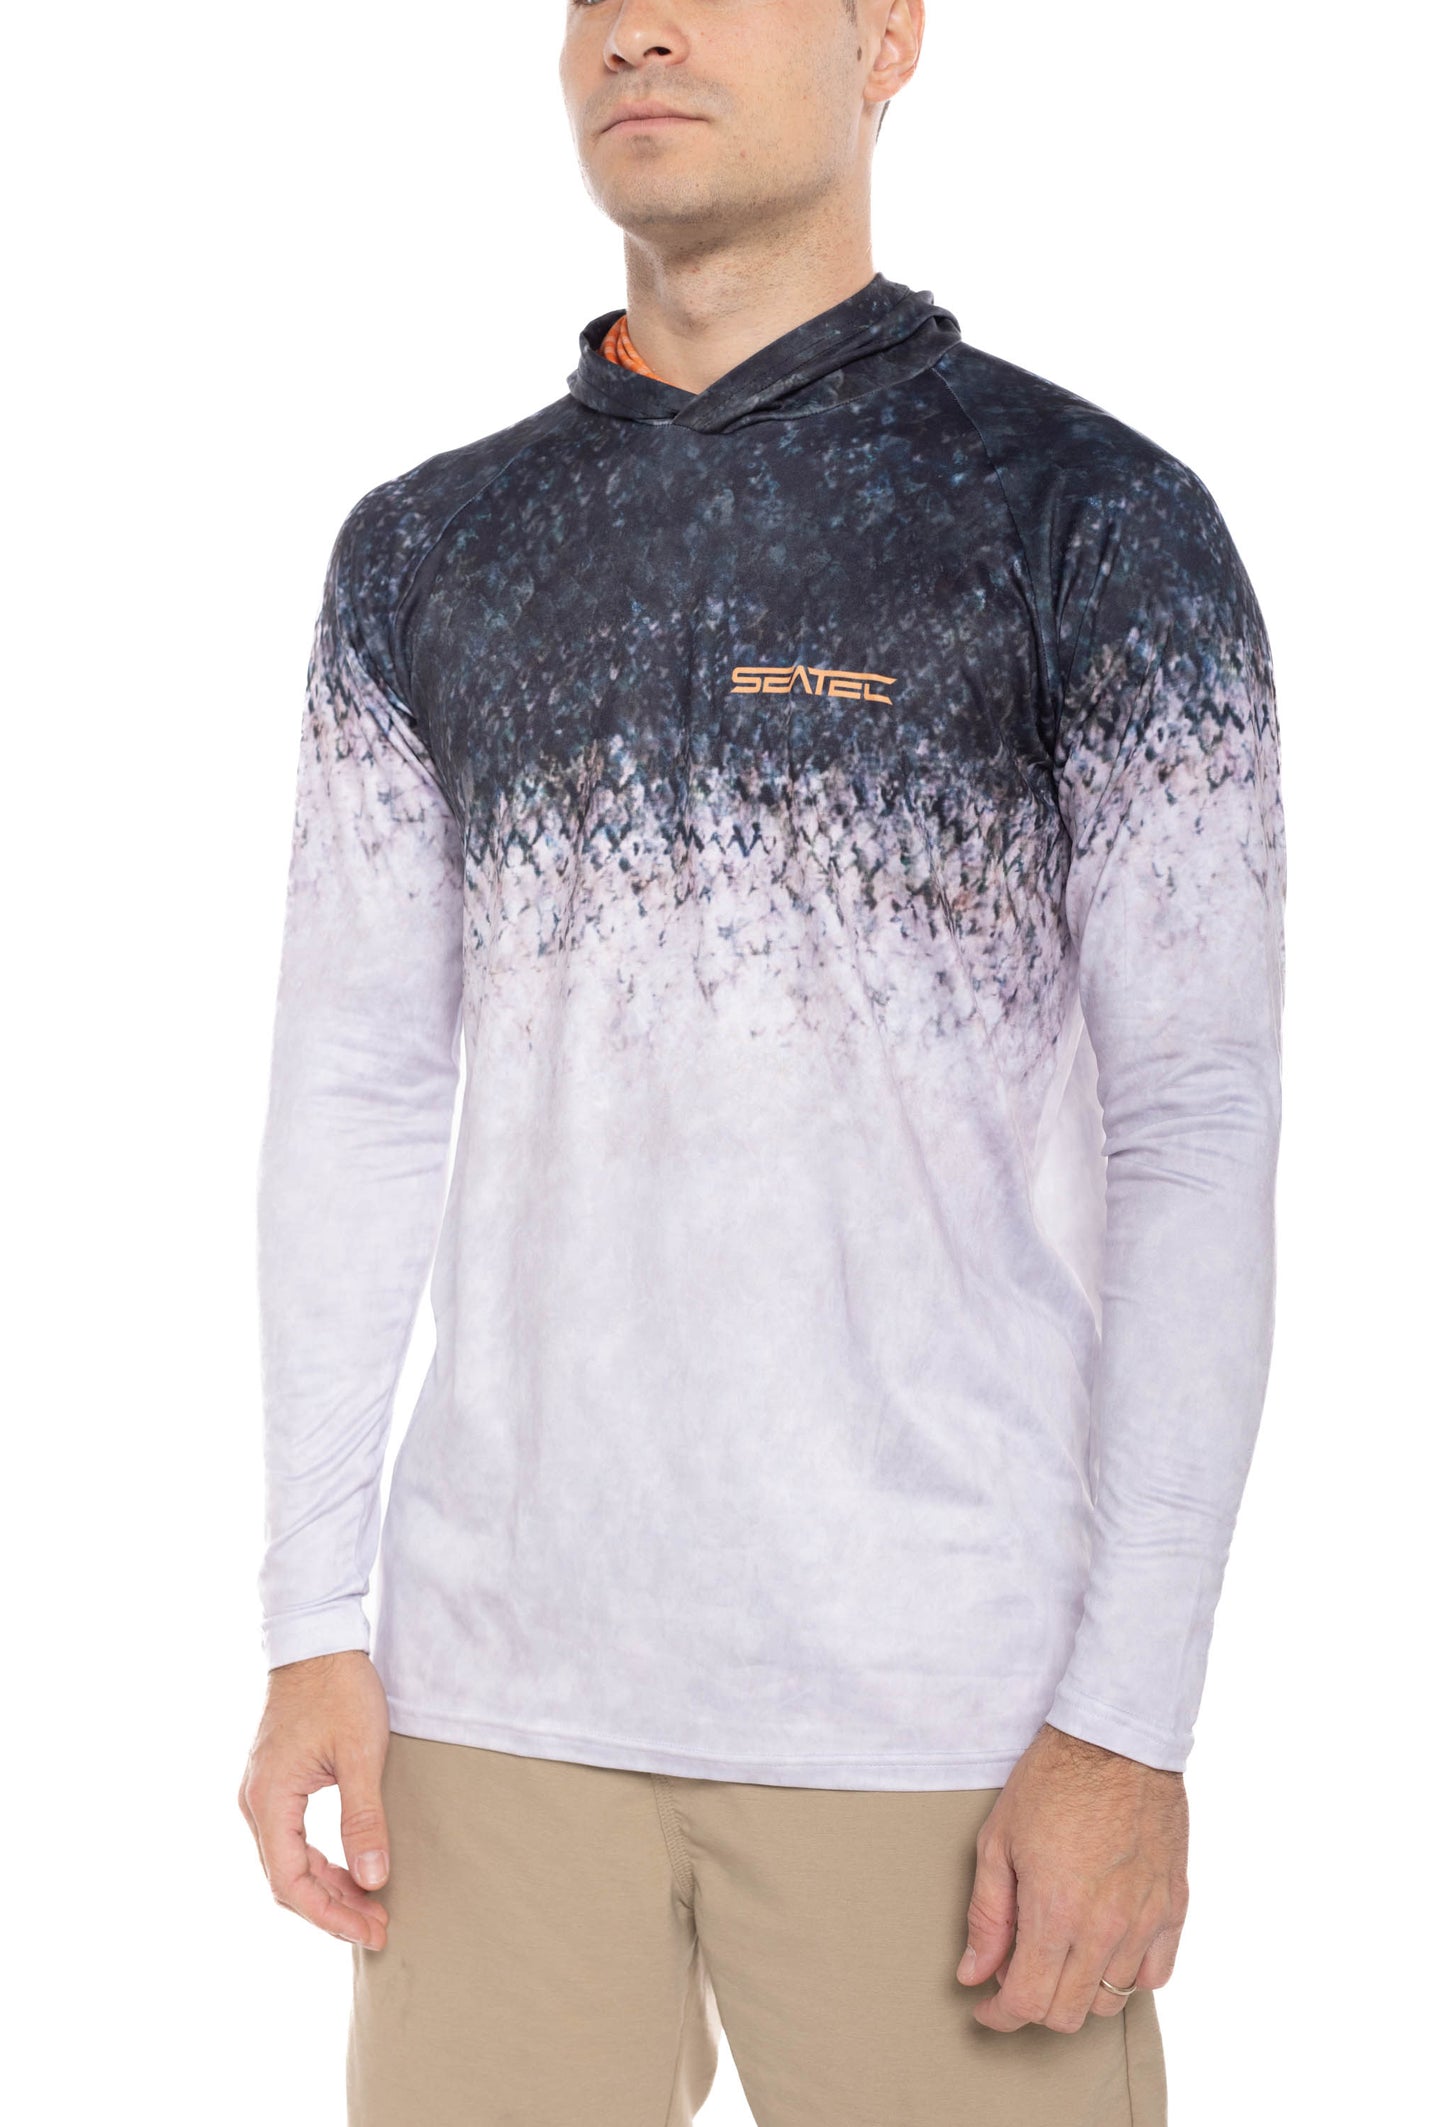 Salmon Hooded Sport Tec Performance Shirt, Long Sleeve – Seatec